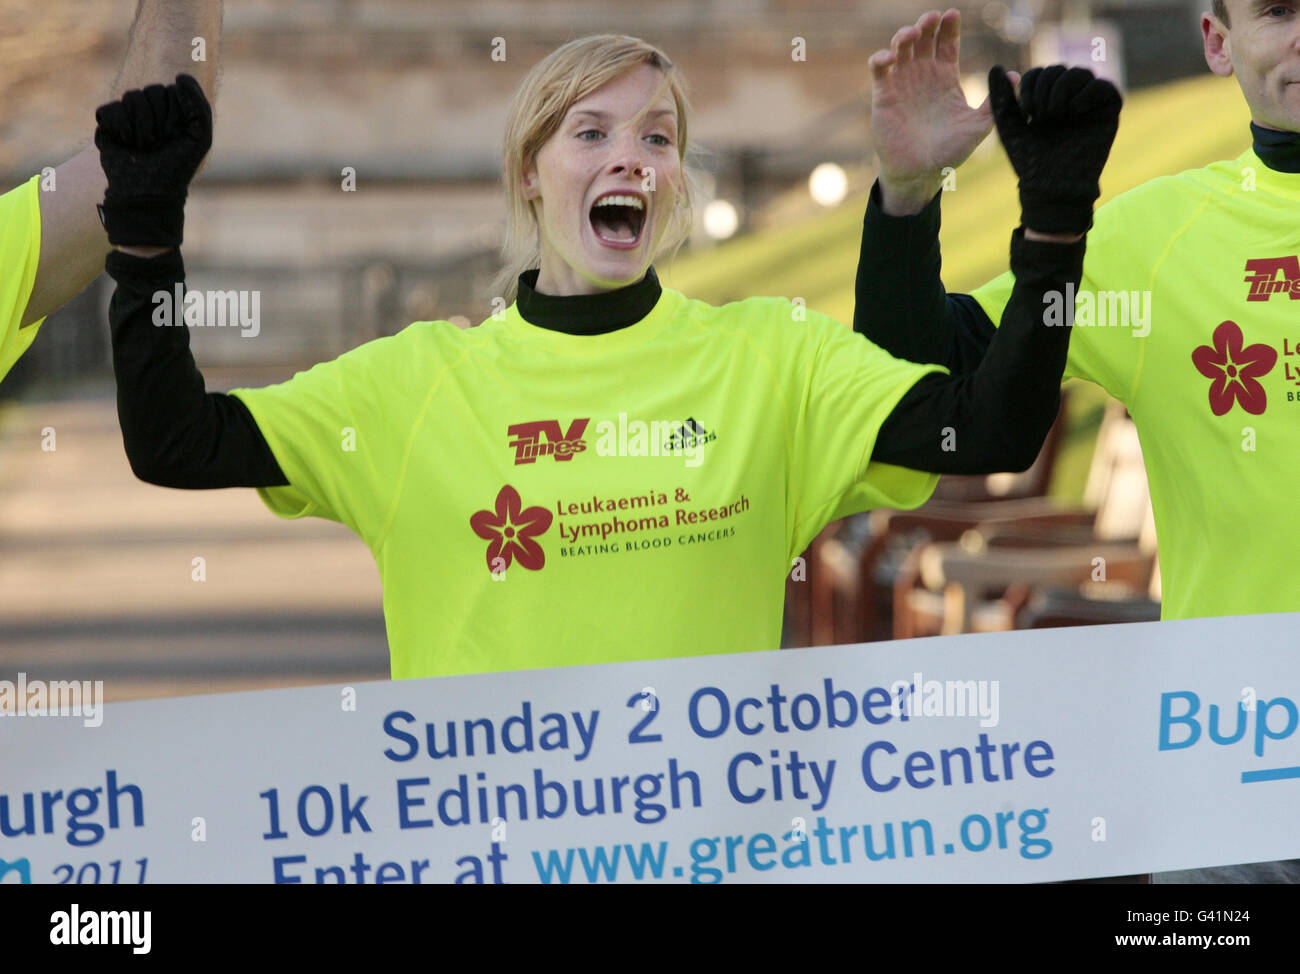 Great Edinburgh Run launch Stock Photo